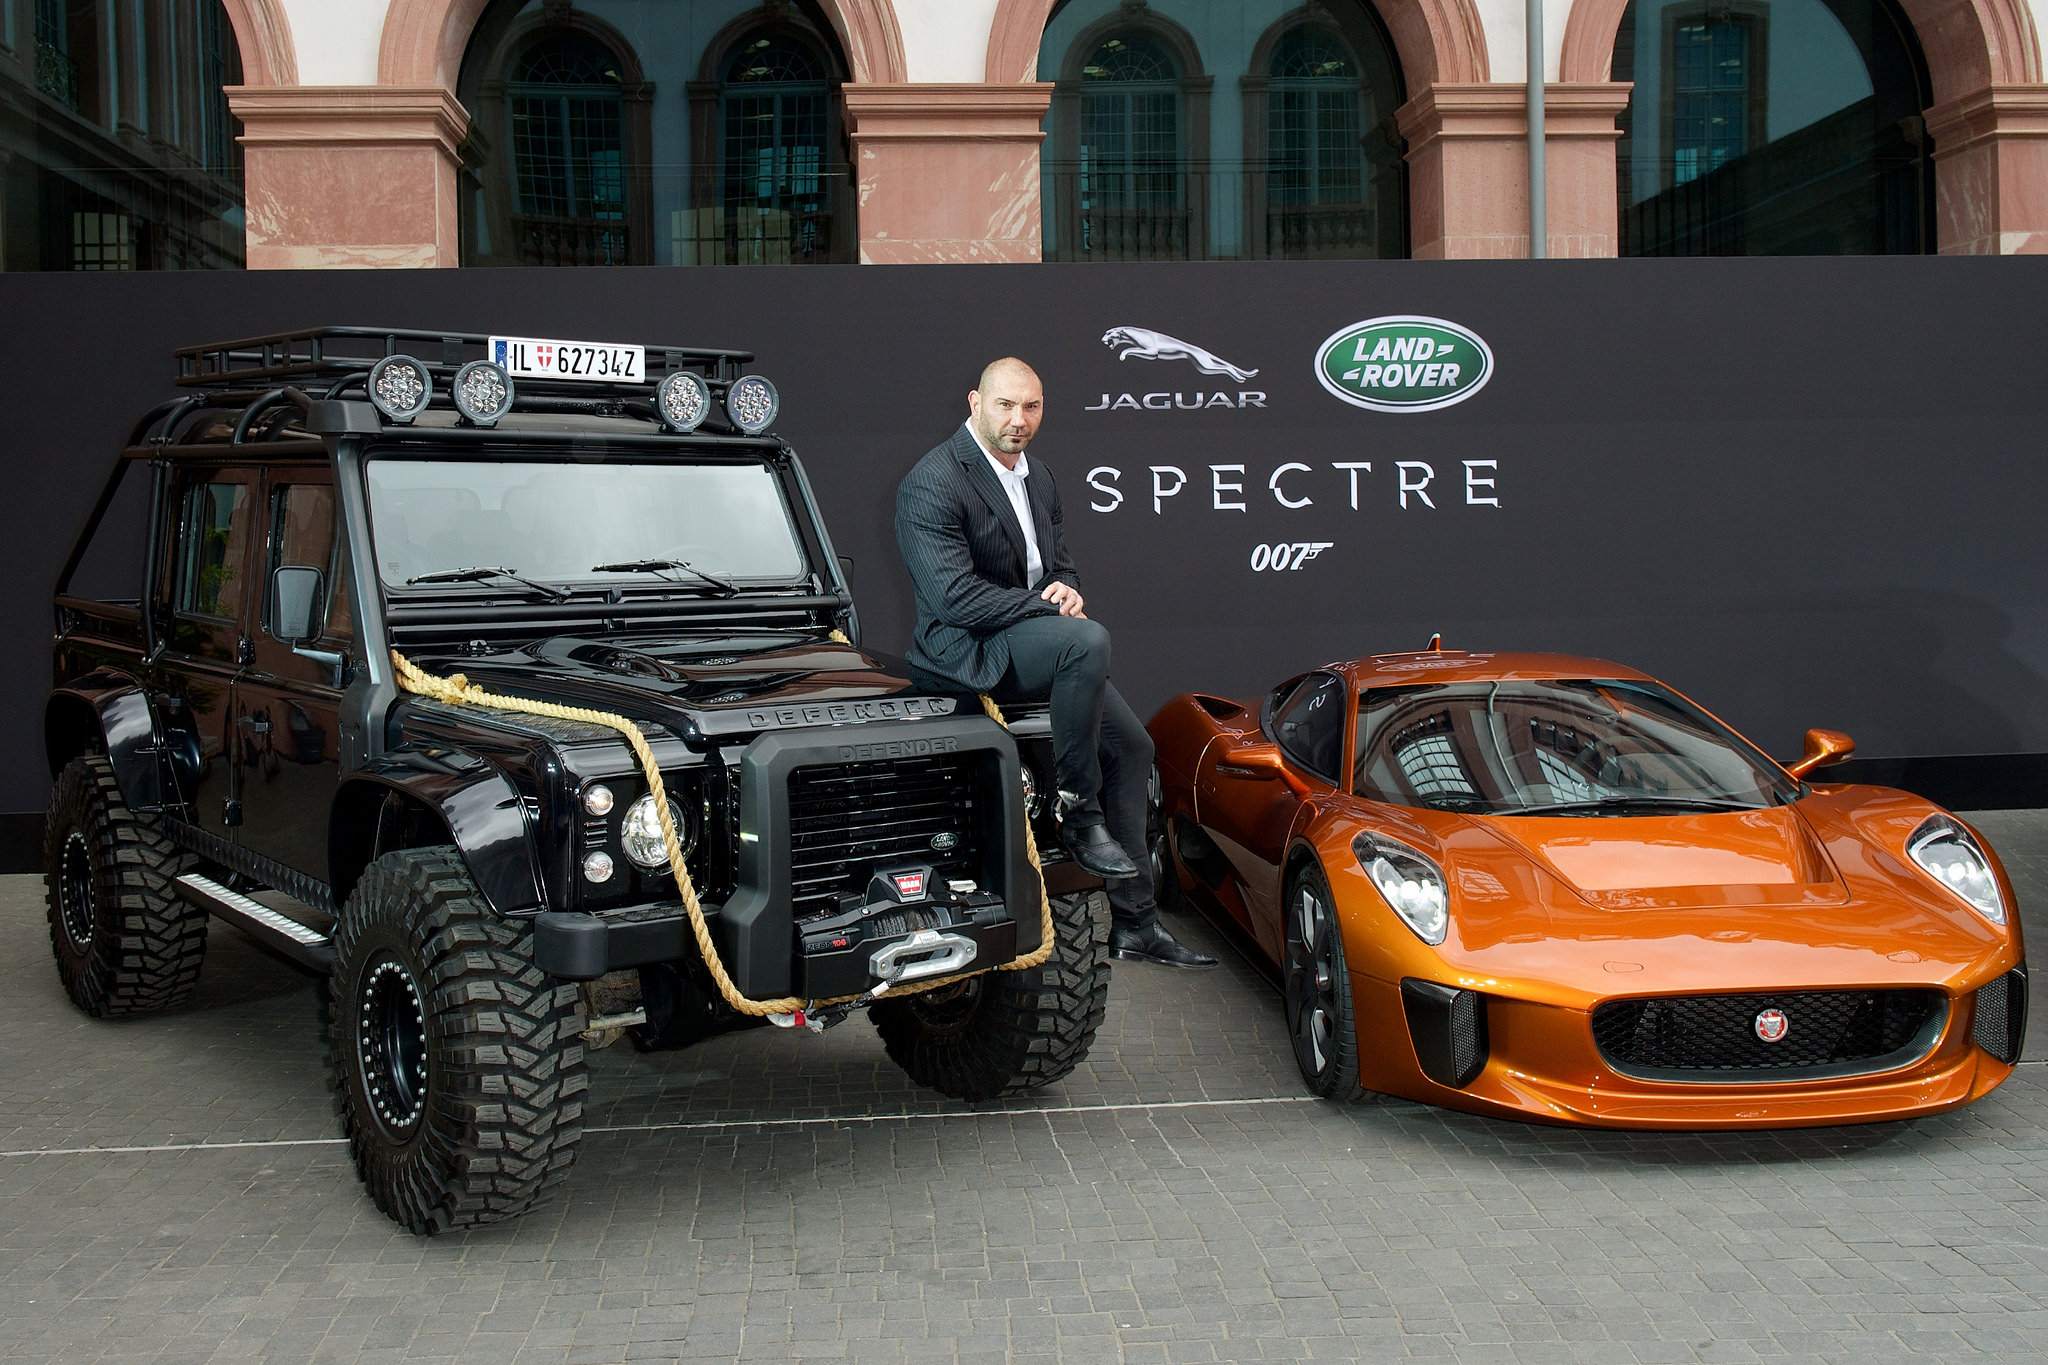 spectre car1 Jaguar Land Rover Latest Bond Cars